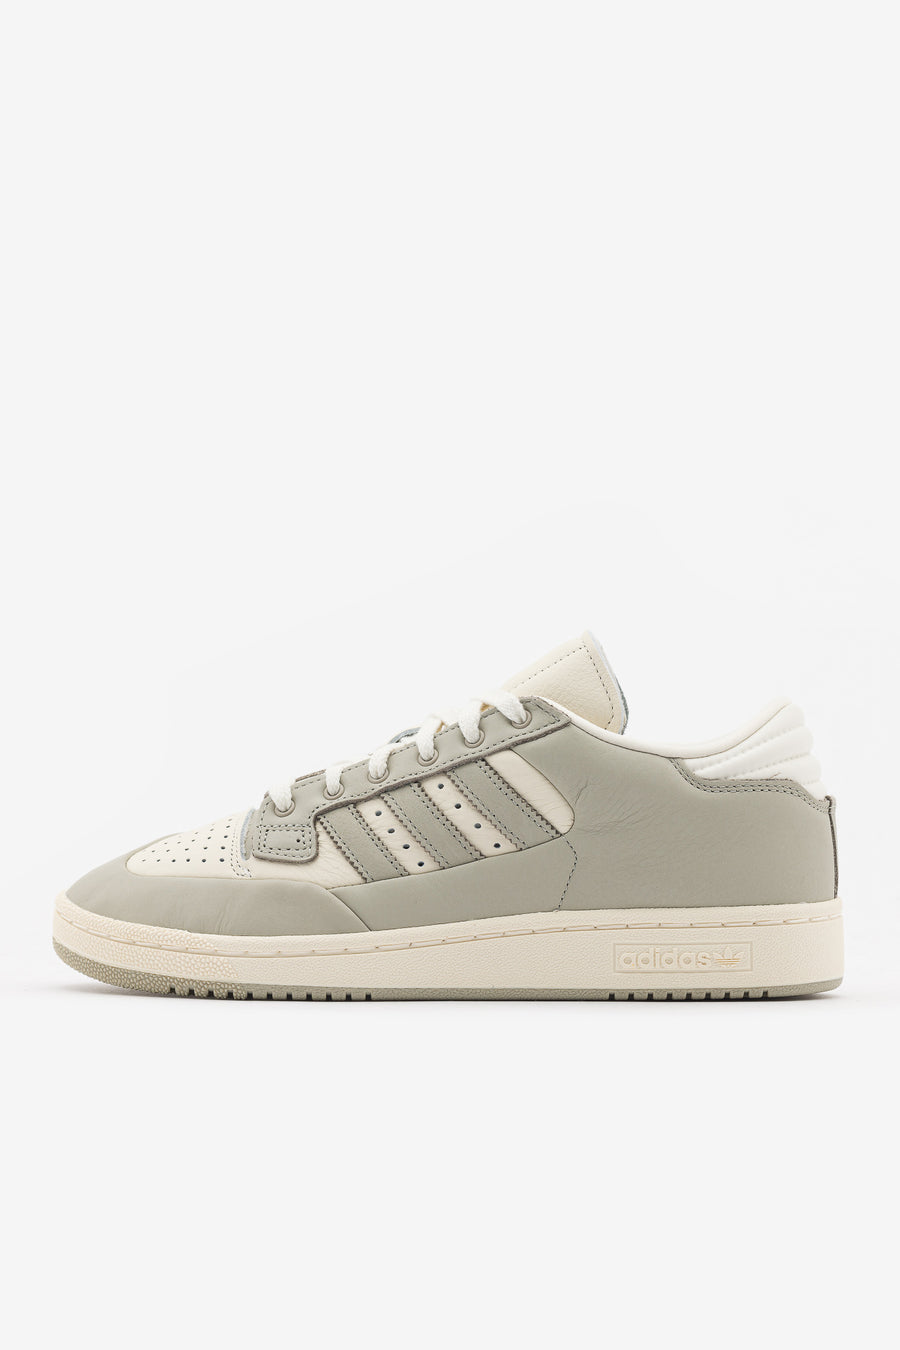 adidas - Men\'s Lo in Cetennial Sesame/Cream White/Cloud 001 White Sneaker 85